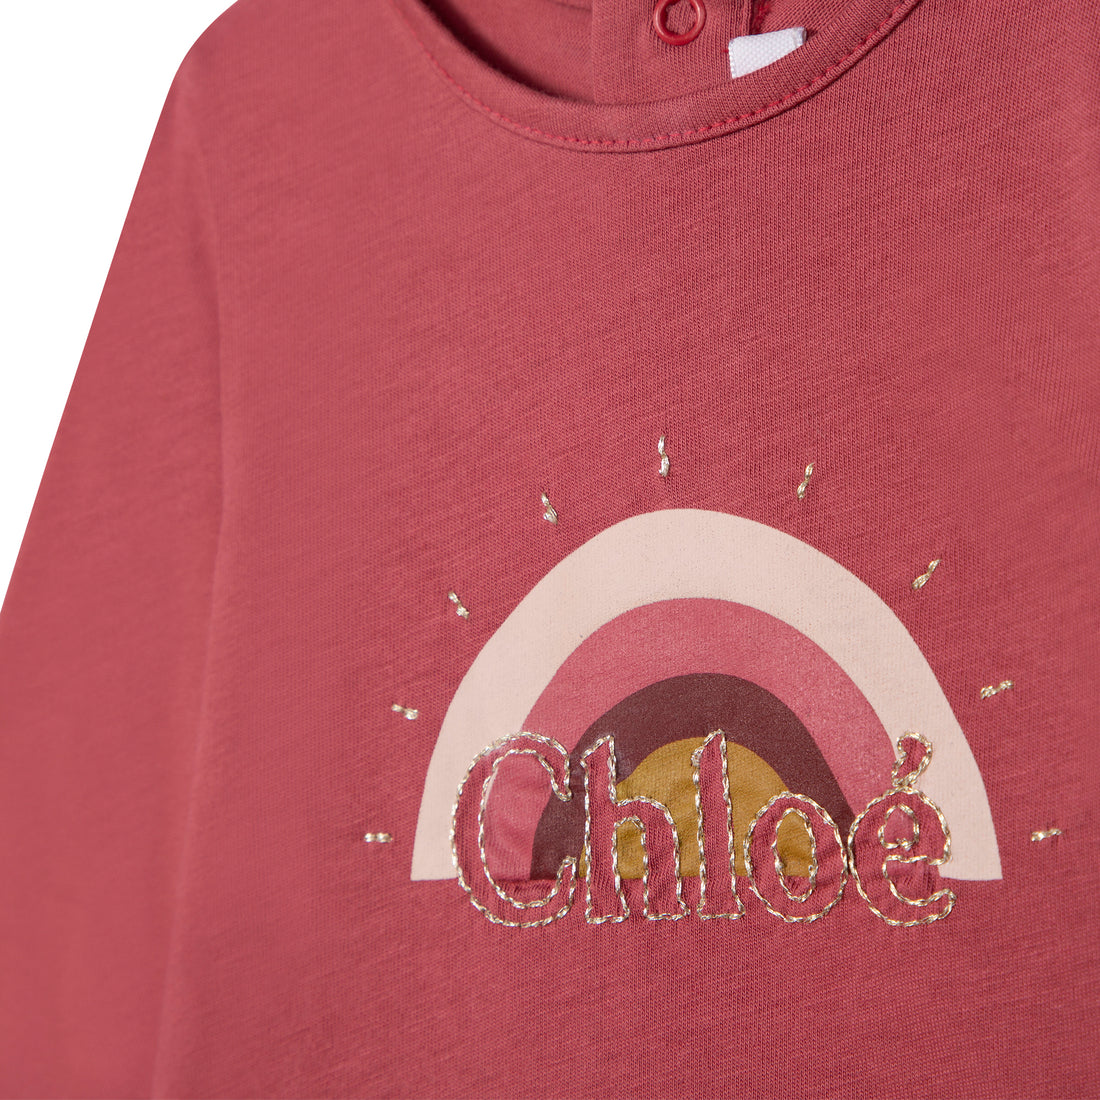 Chloe Long Sleeve T-Shirt Style: C05425